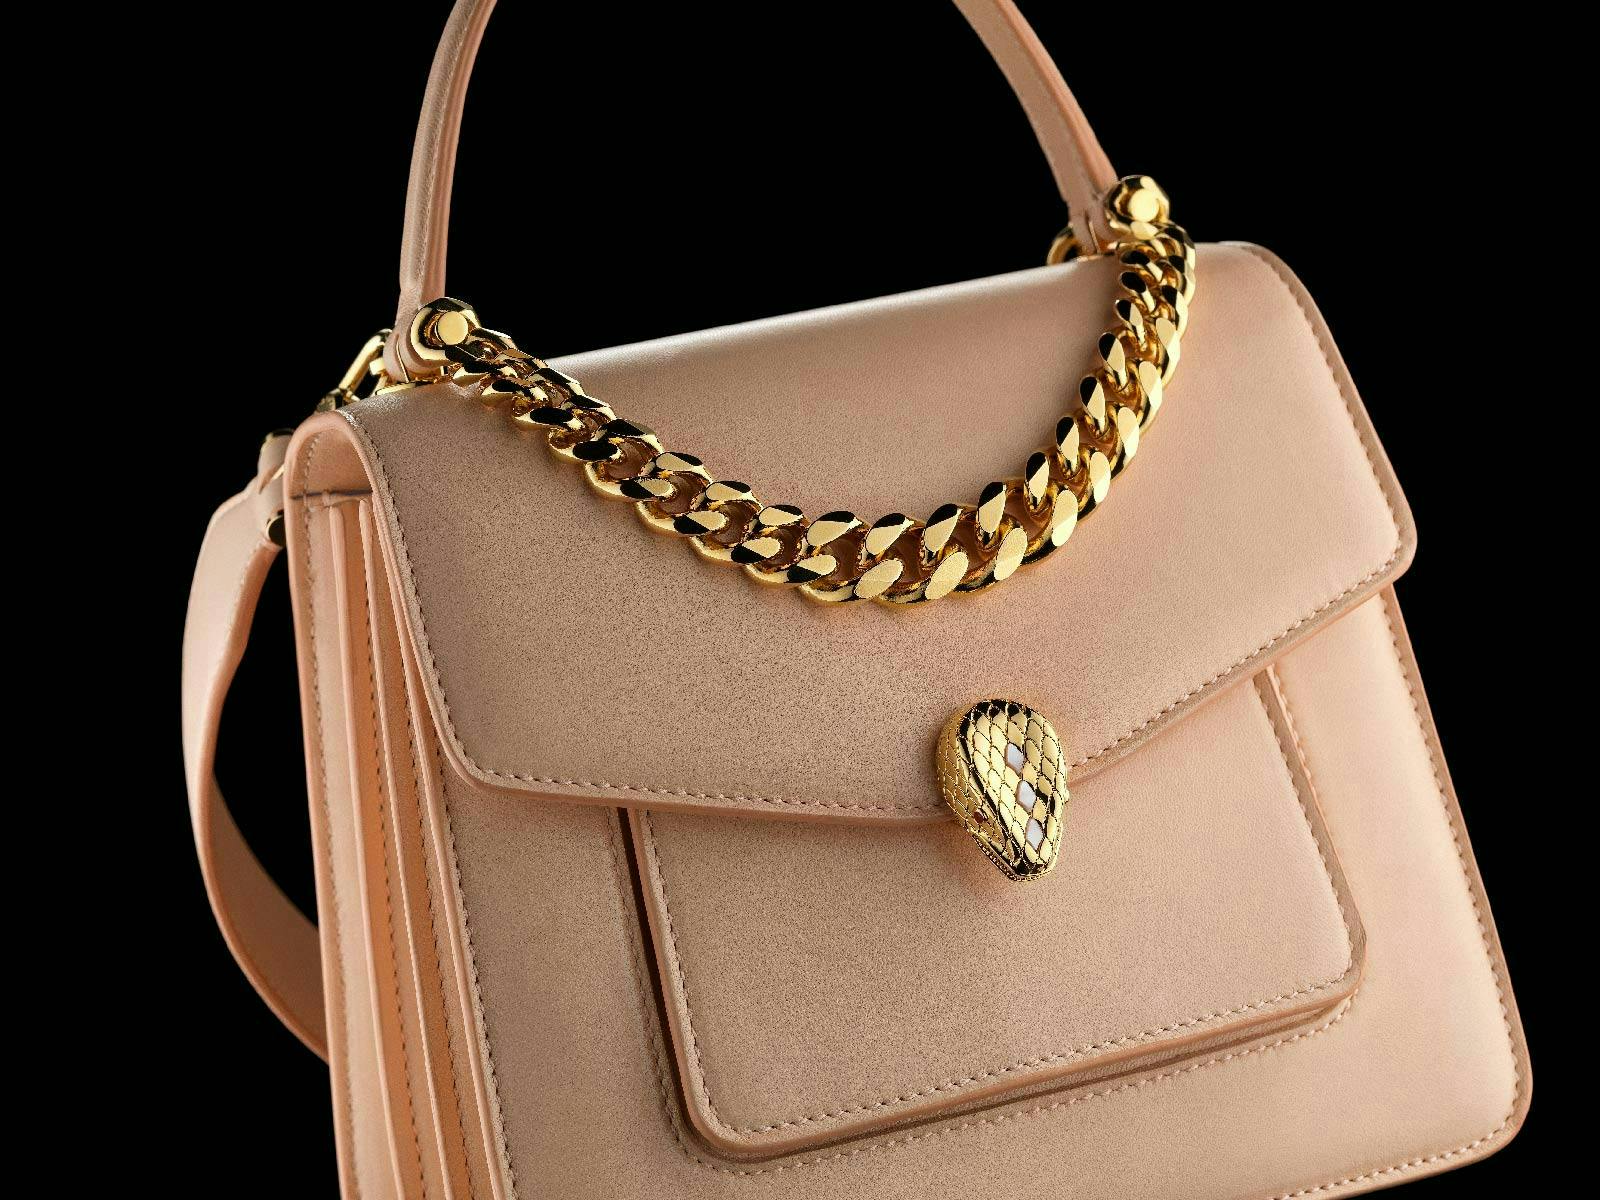 accessory bag accessories handbag purse